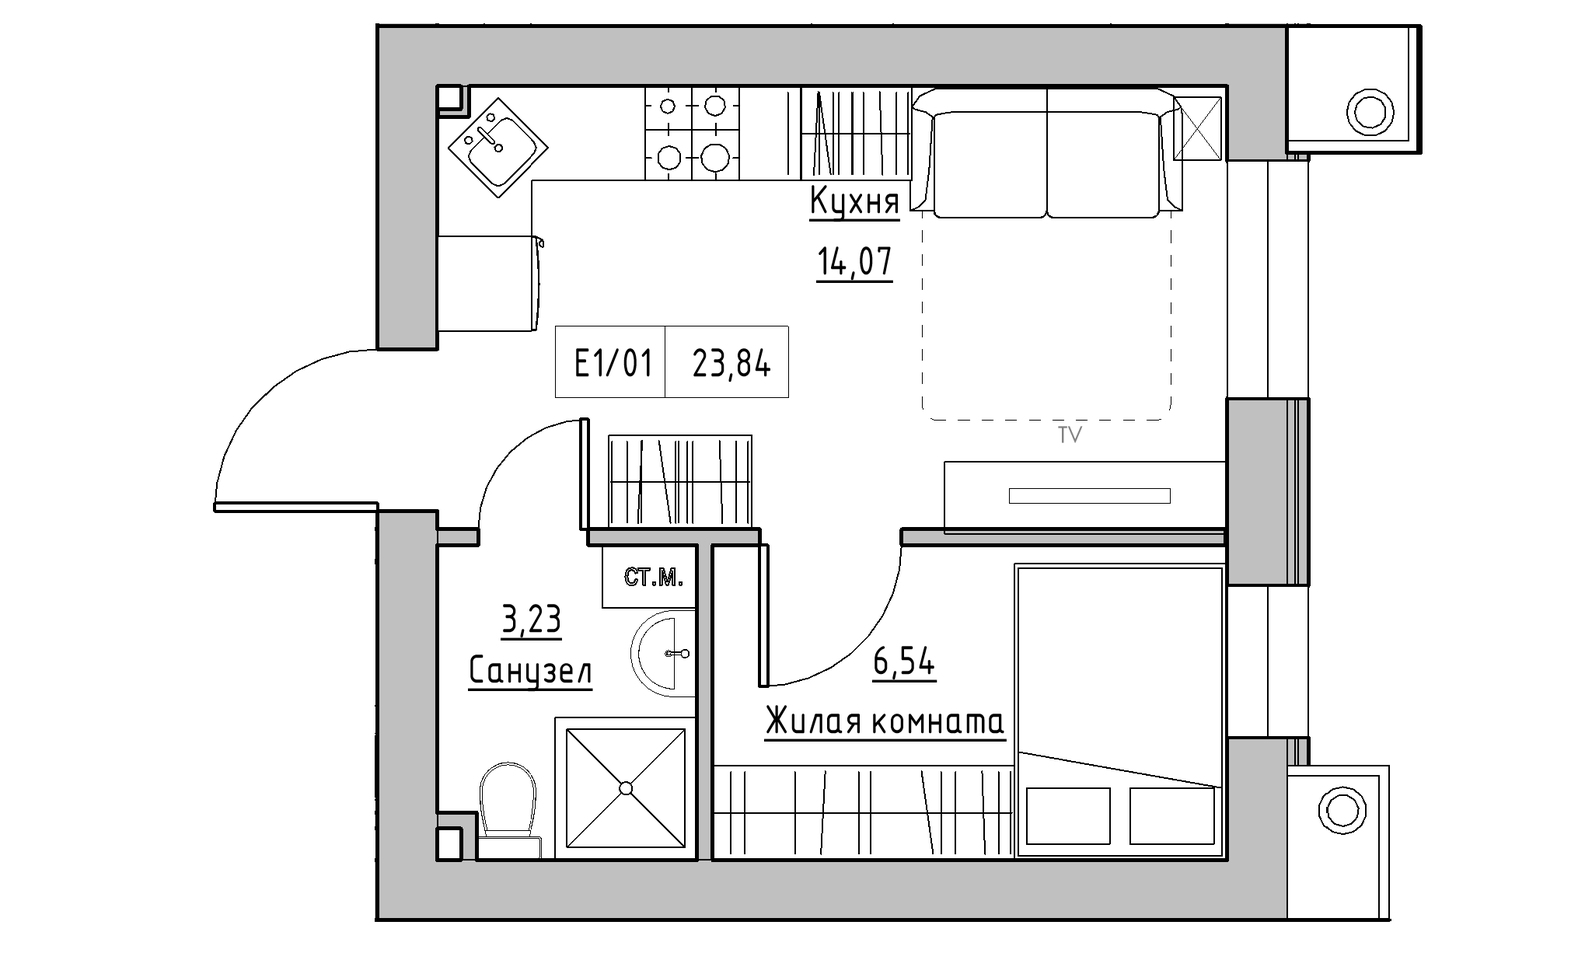 Planning 1-rm flats area 23.84m2, KS-014-04/0011.